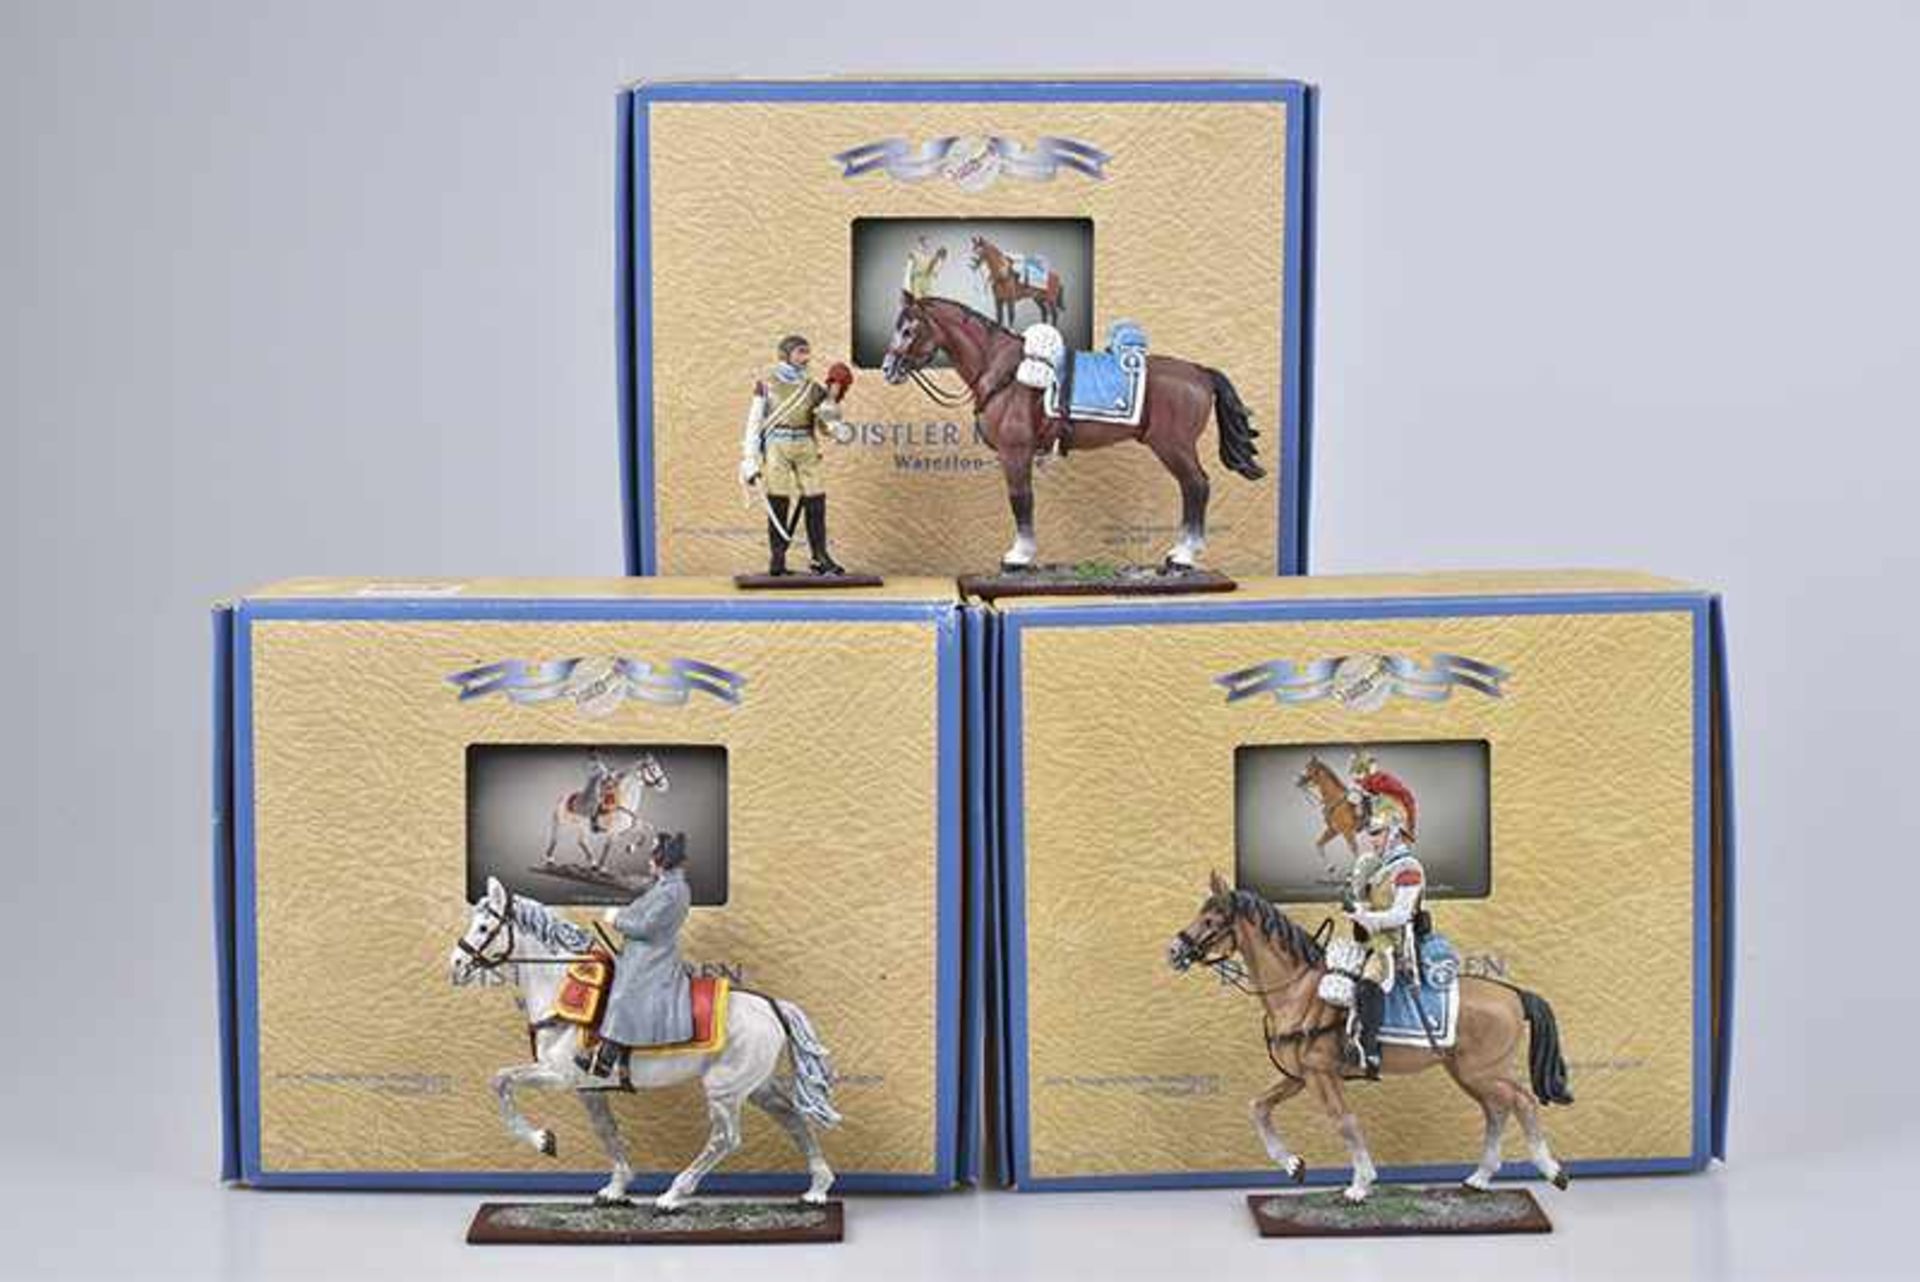 DISTLER Waterloo-Serie, 3 Figuren, M 1:24, Metall, 3x Reiter, 1x Napoleon on Horse, 2x French